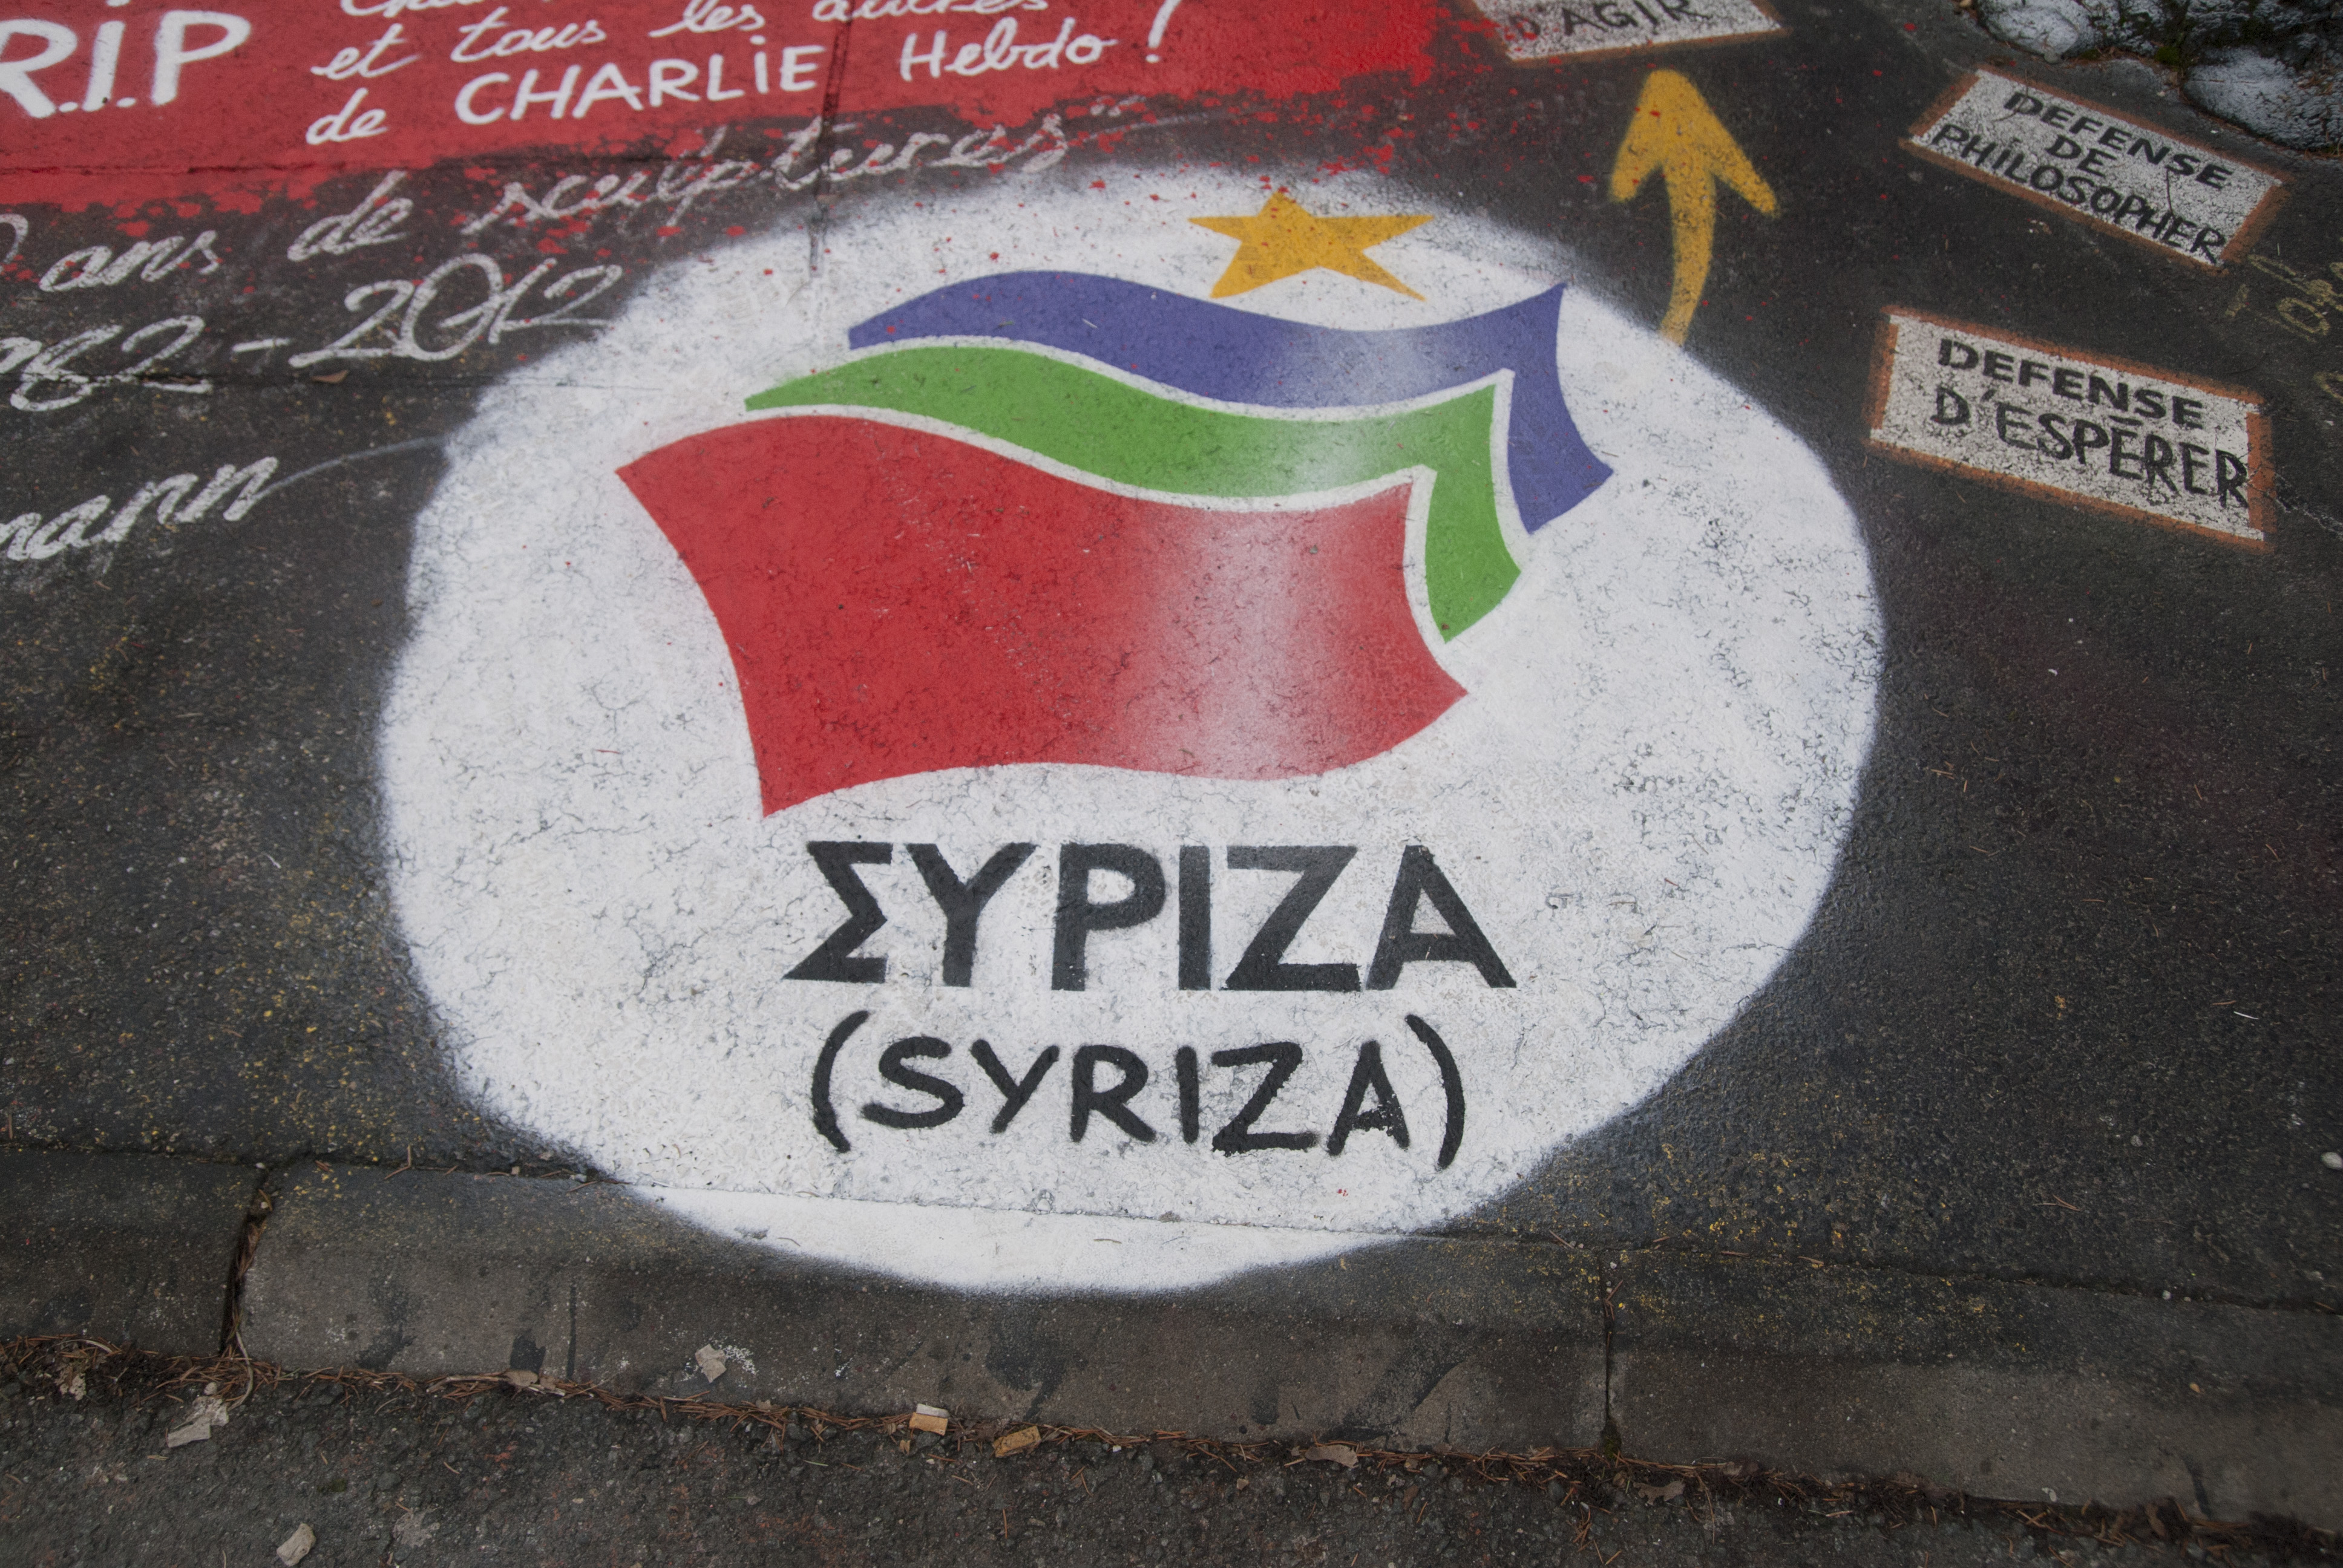 Le logo de Syriza (Thierry Ehrmann - Licence CC)